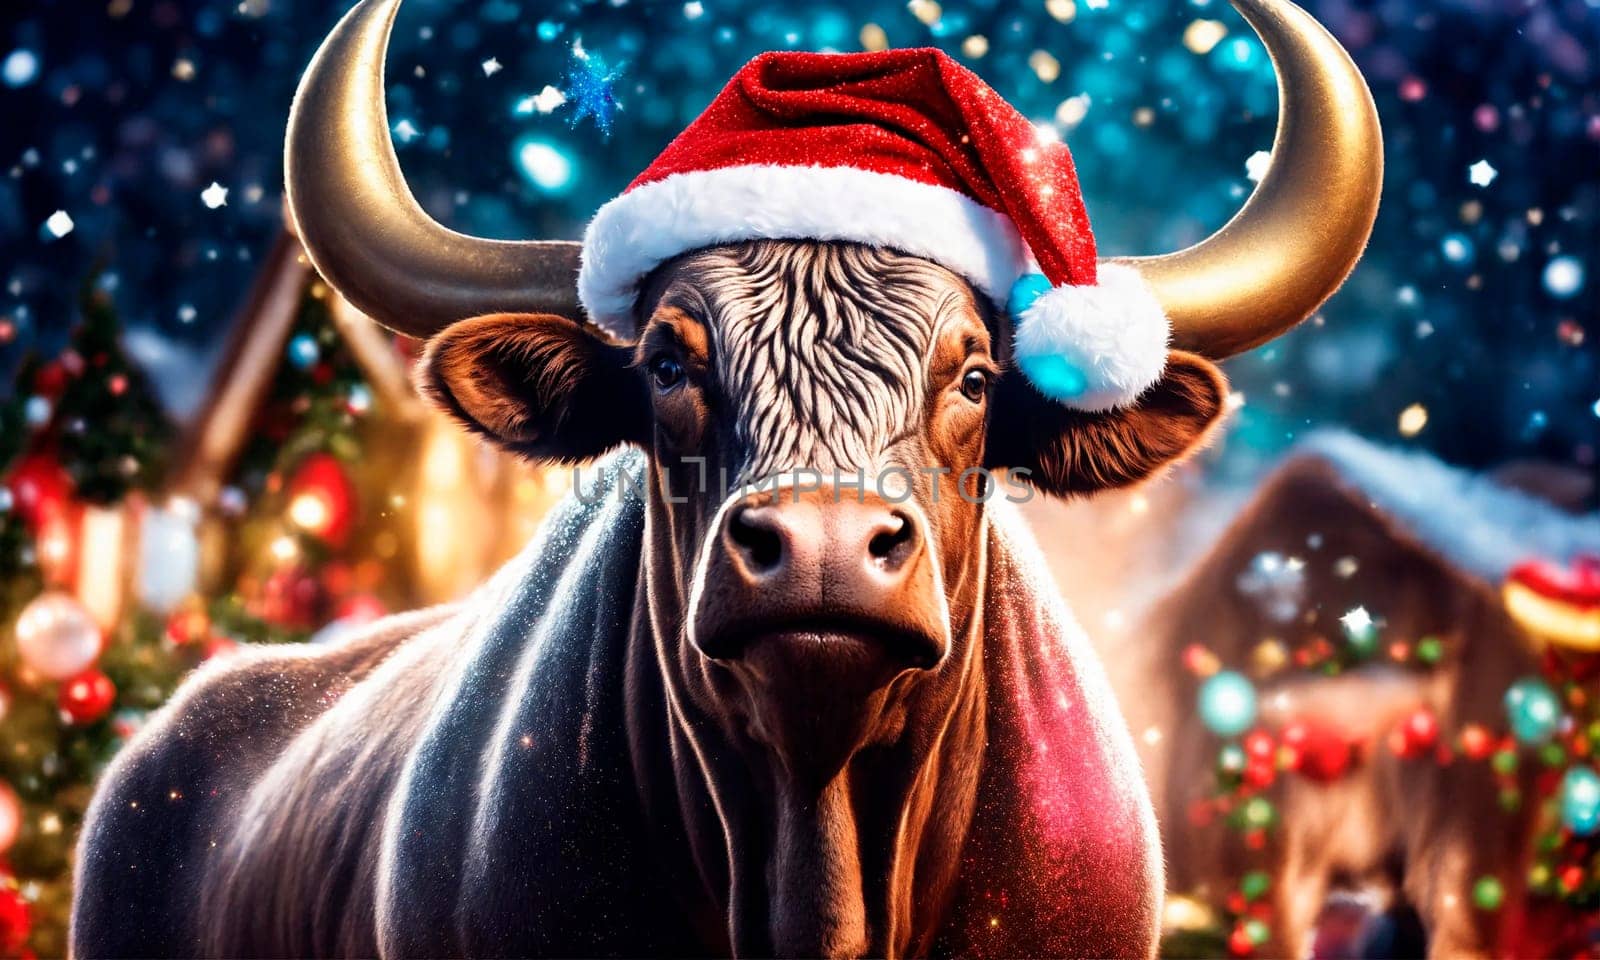 bull in santa's hat year of the ox. Selective focus. by yanadjana